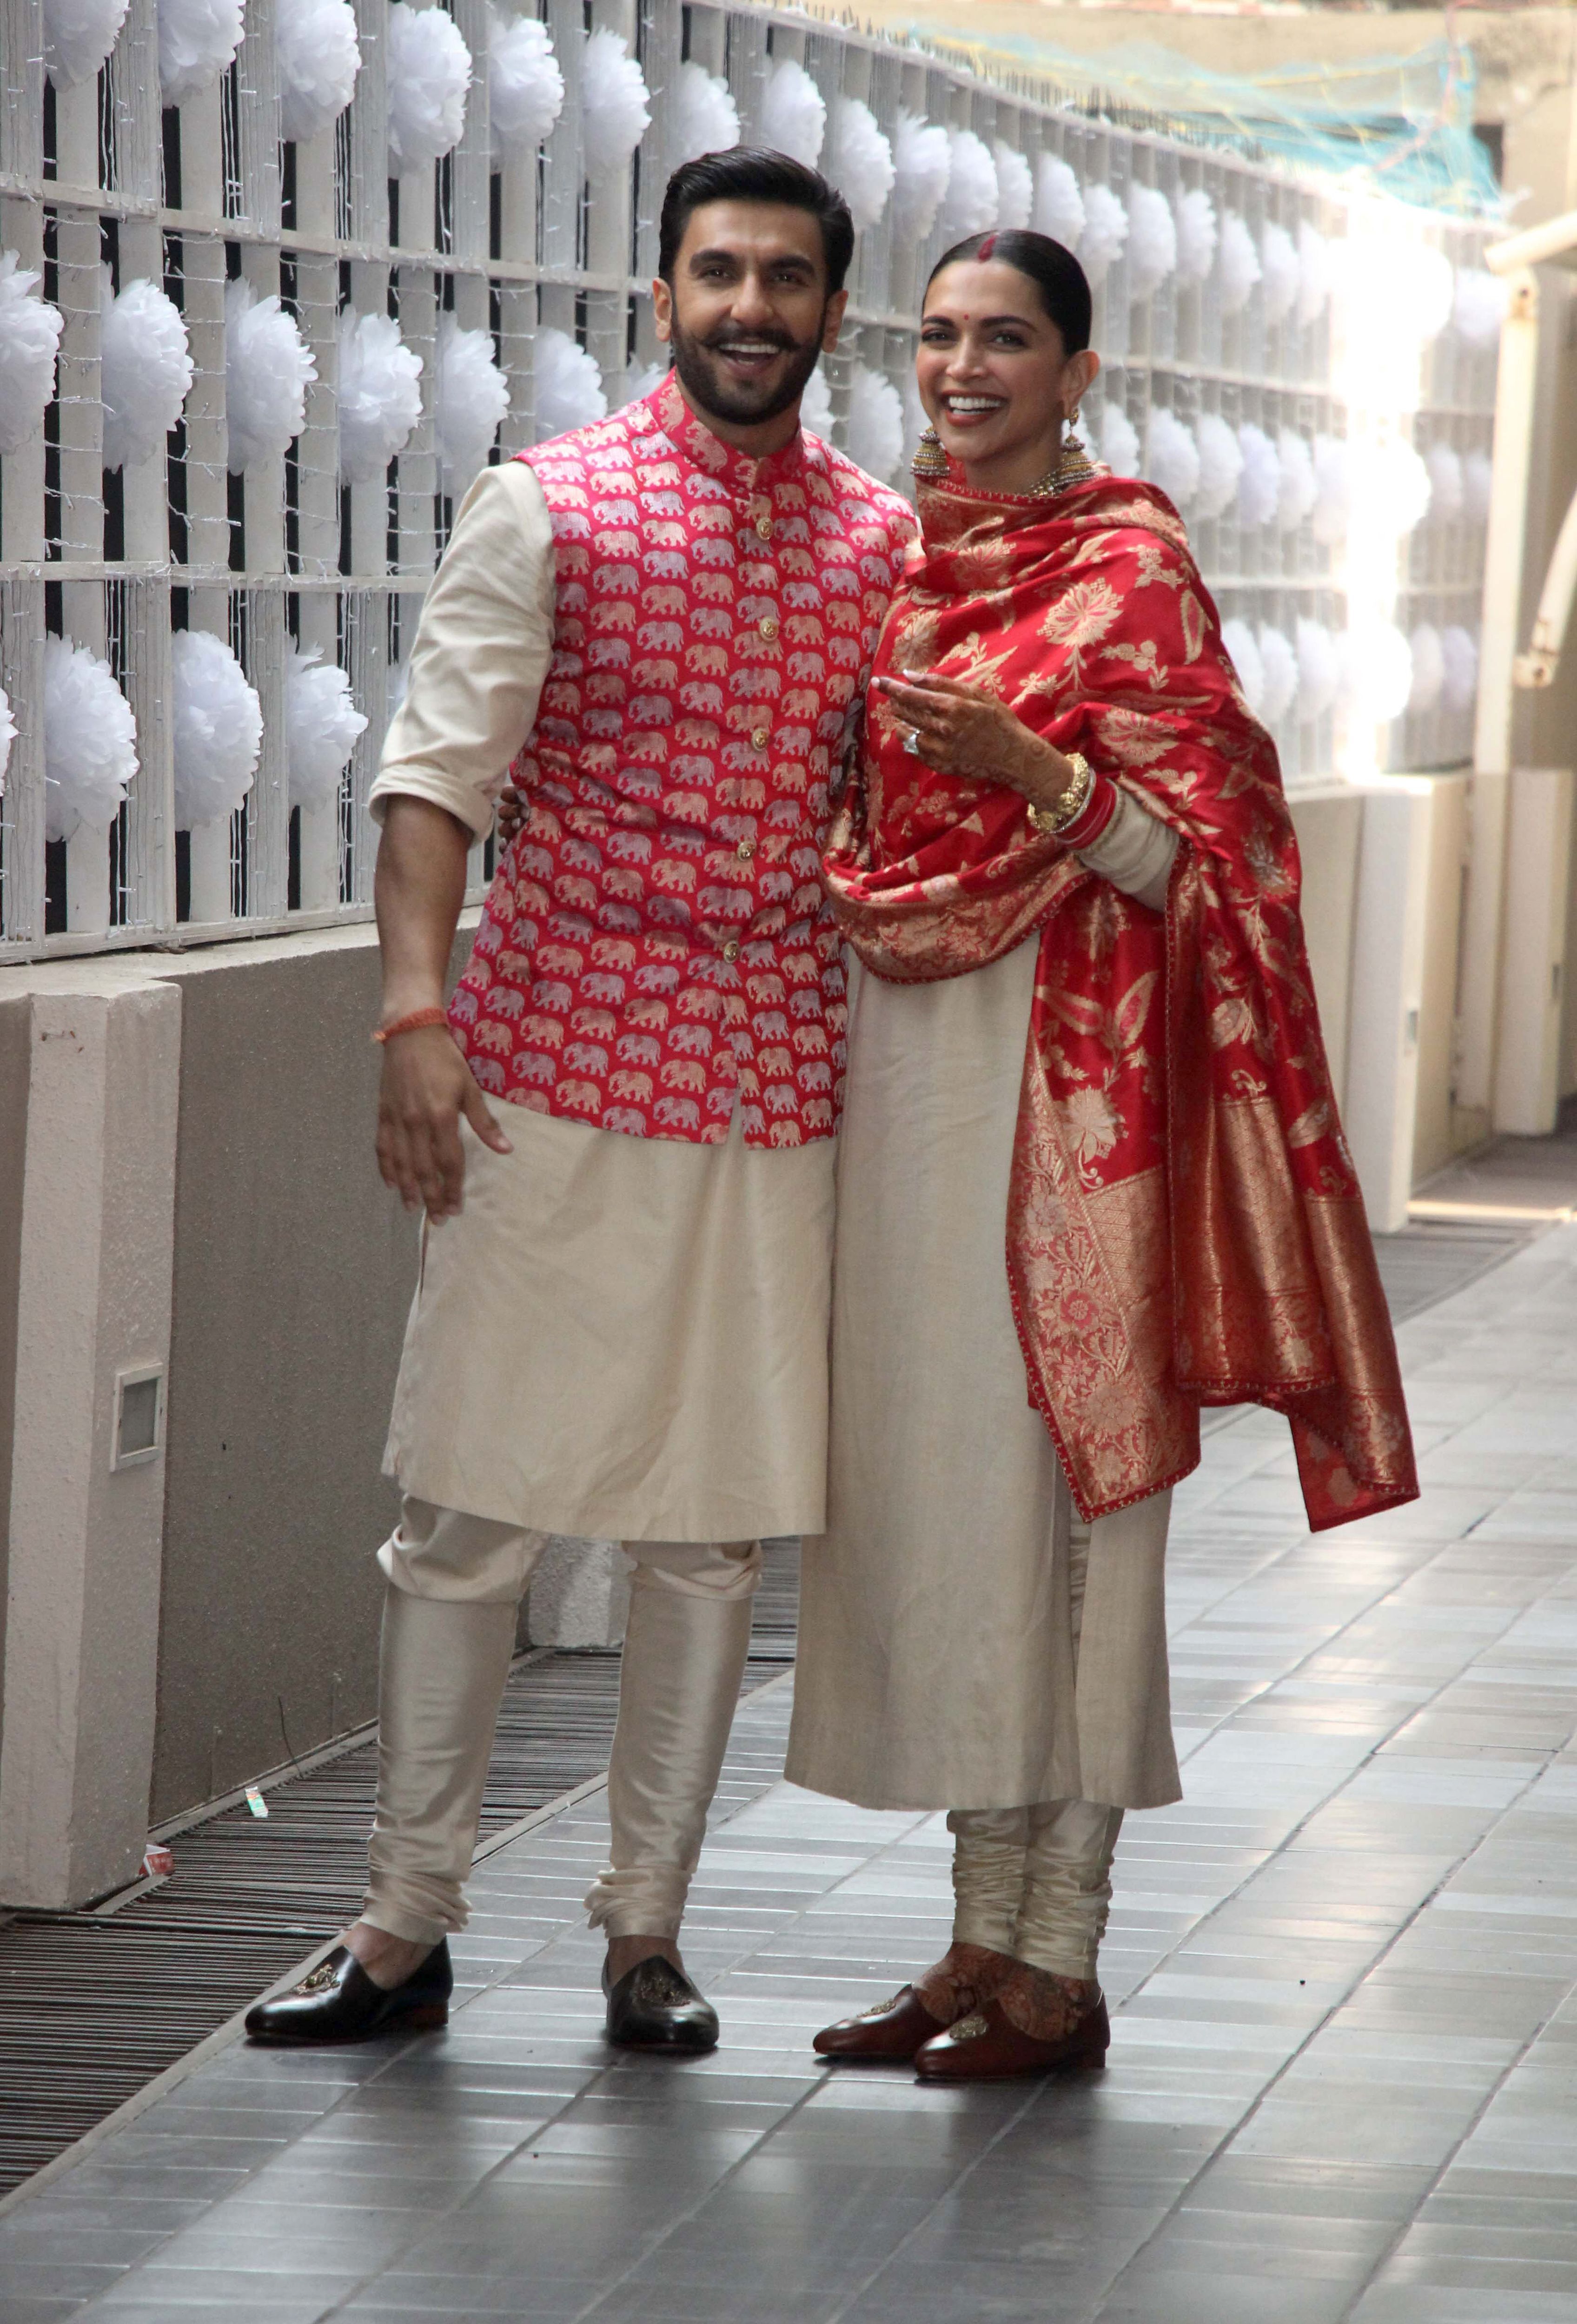 Deepika Padukone Shares Photos from Gorgeous Wedding to Ranveer Singh